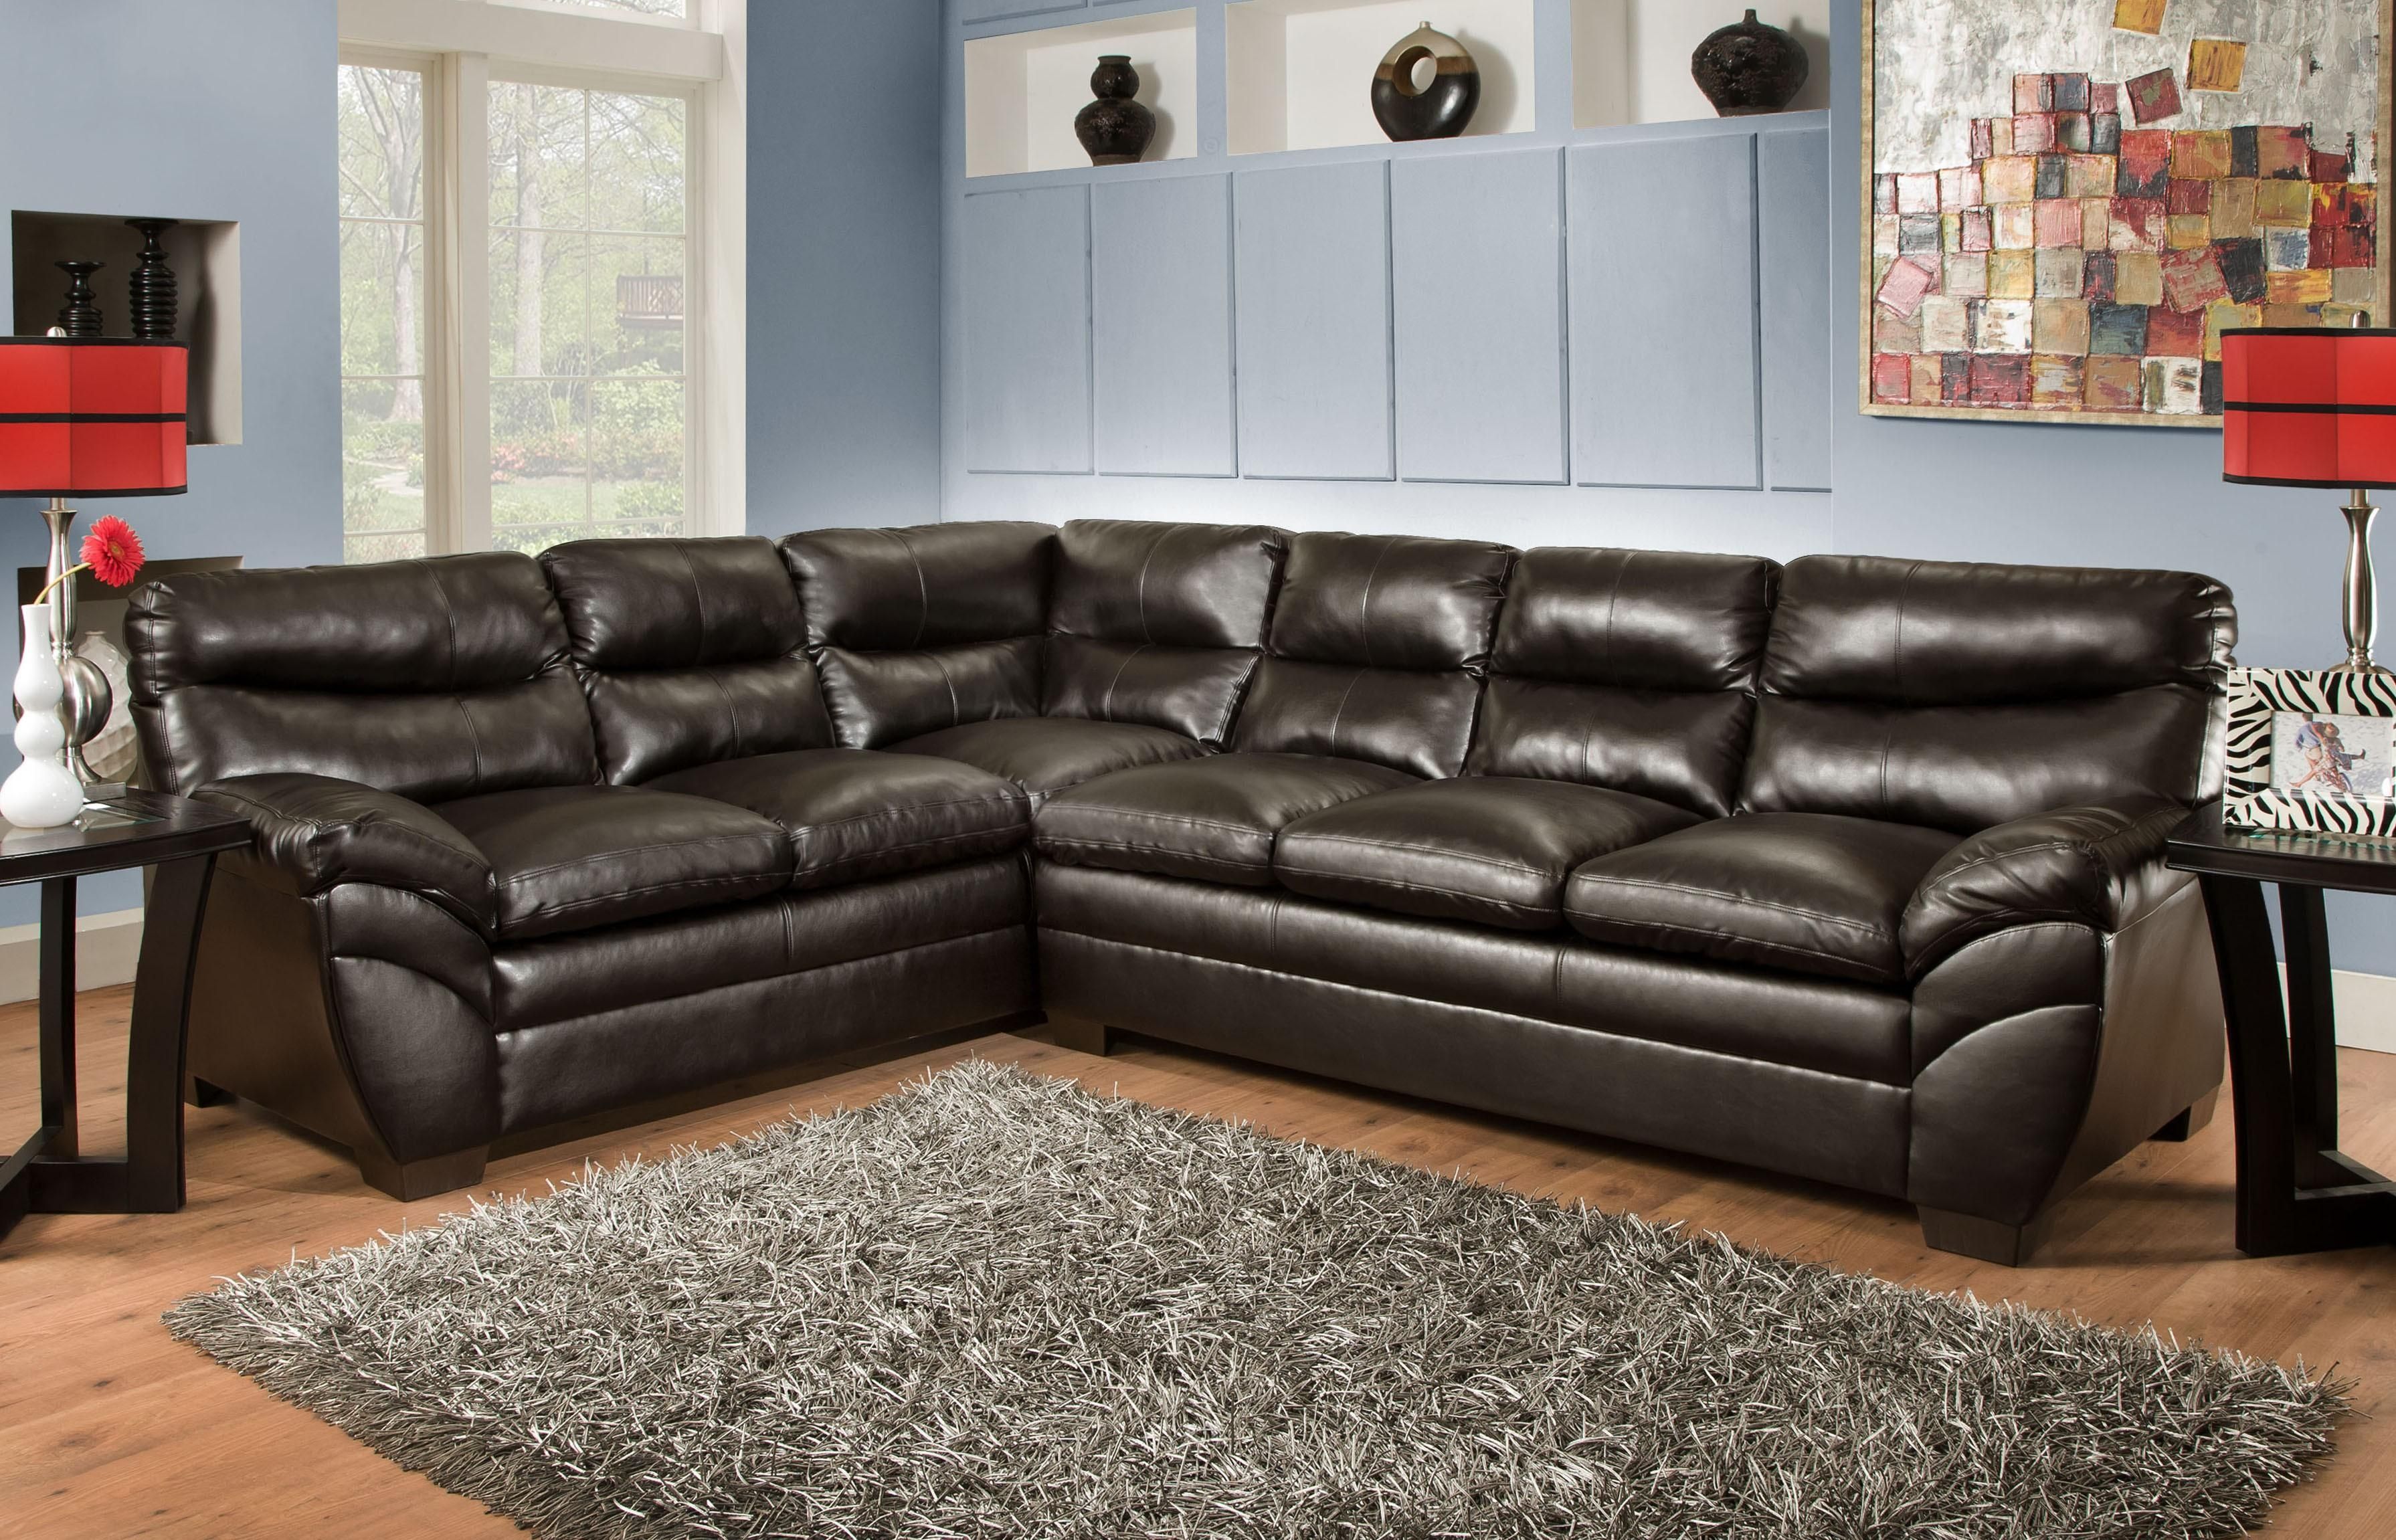 Sofa : Leather Sofas Orange County Home Design Wonderfull With Sofa Orange County (View 5 of 20)